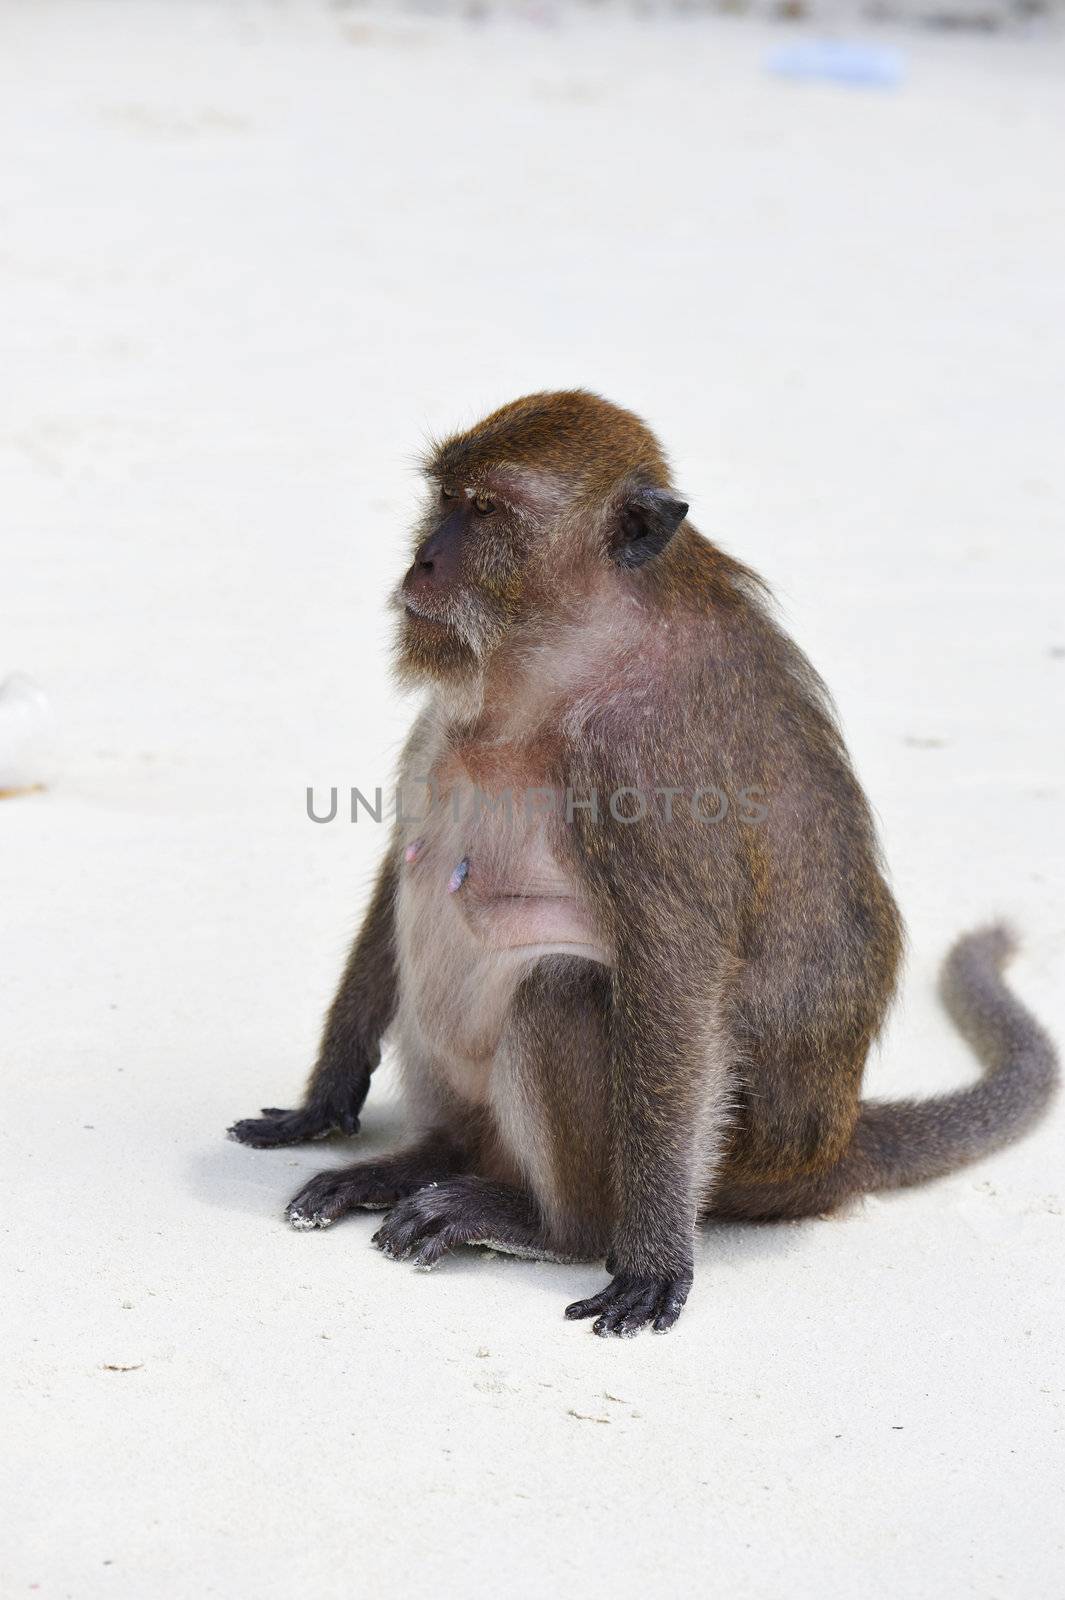 Beach monkey by haveseen